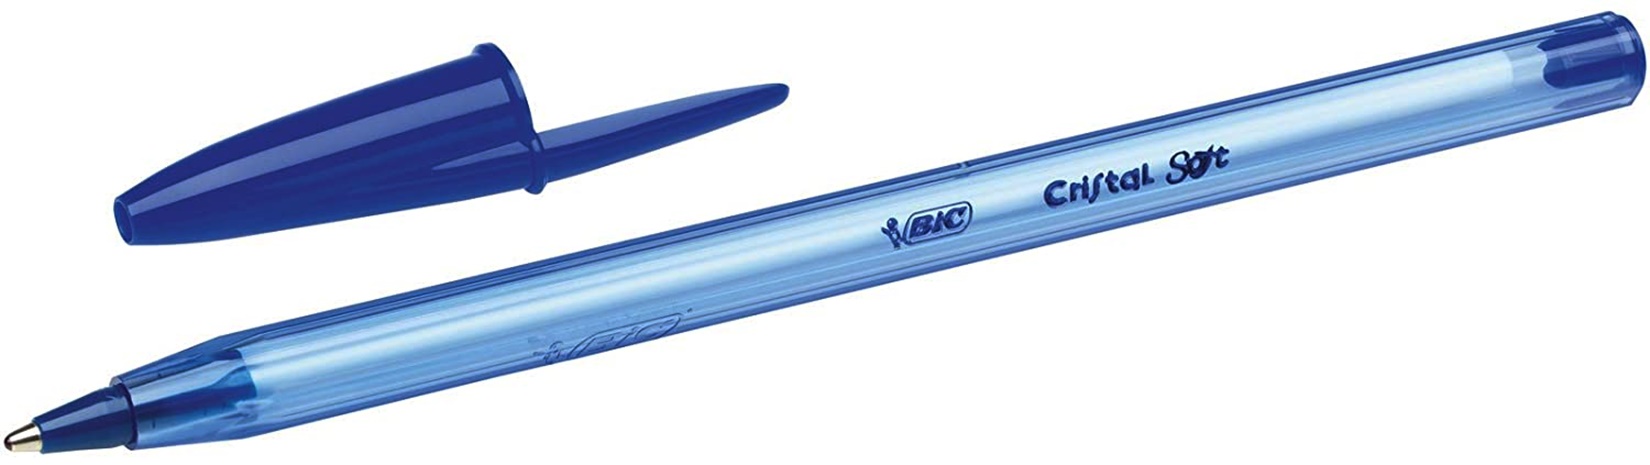 Bic Cristal Stick Ball Pens Medium Point Blue (Pack of 4), 4 pack - Ralphs